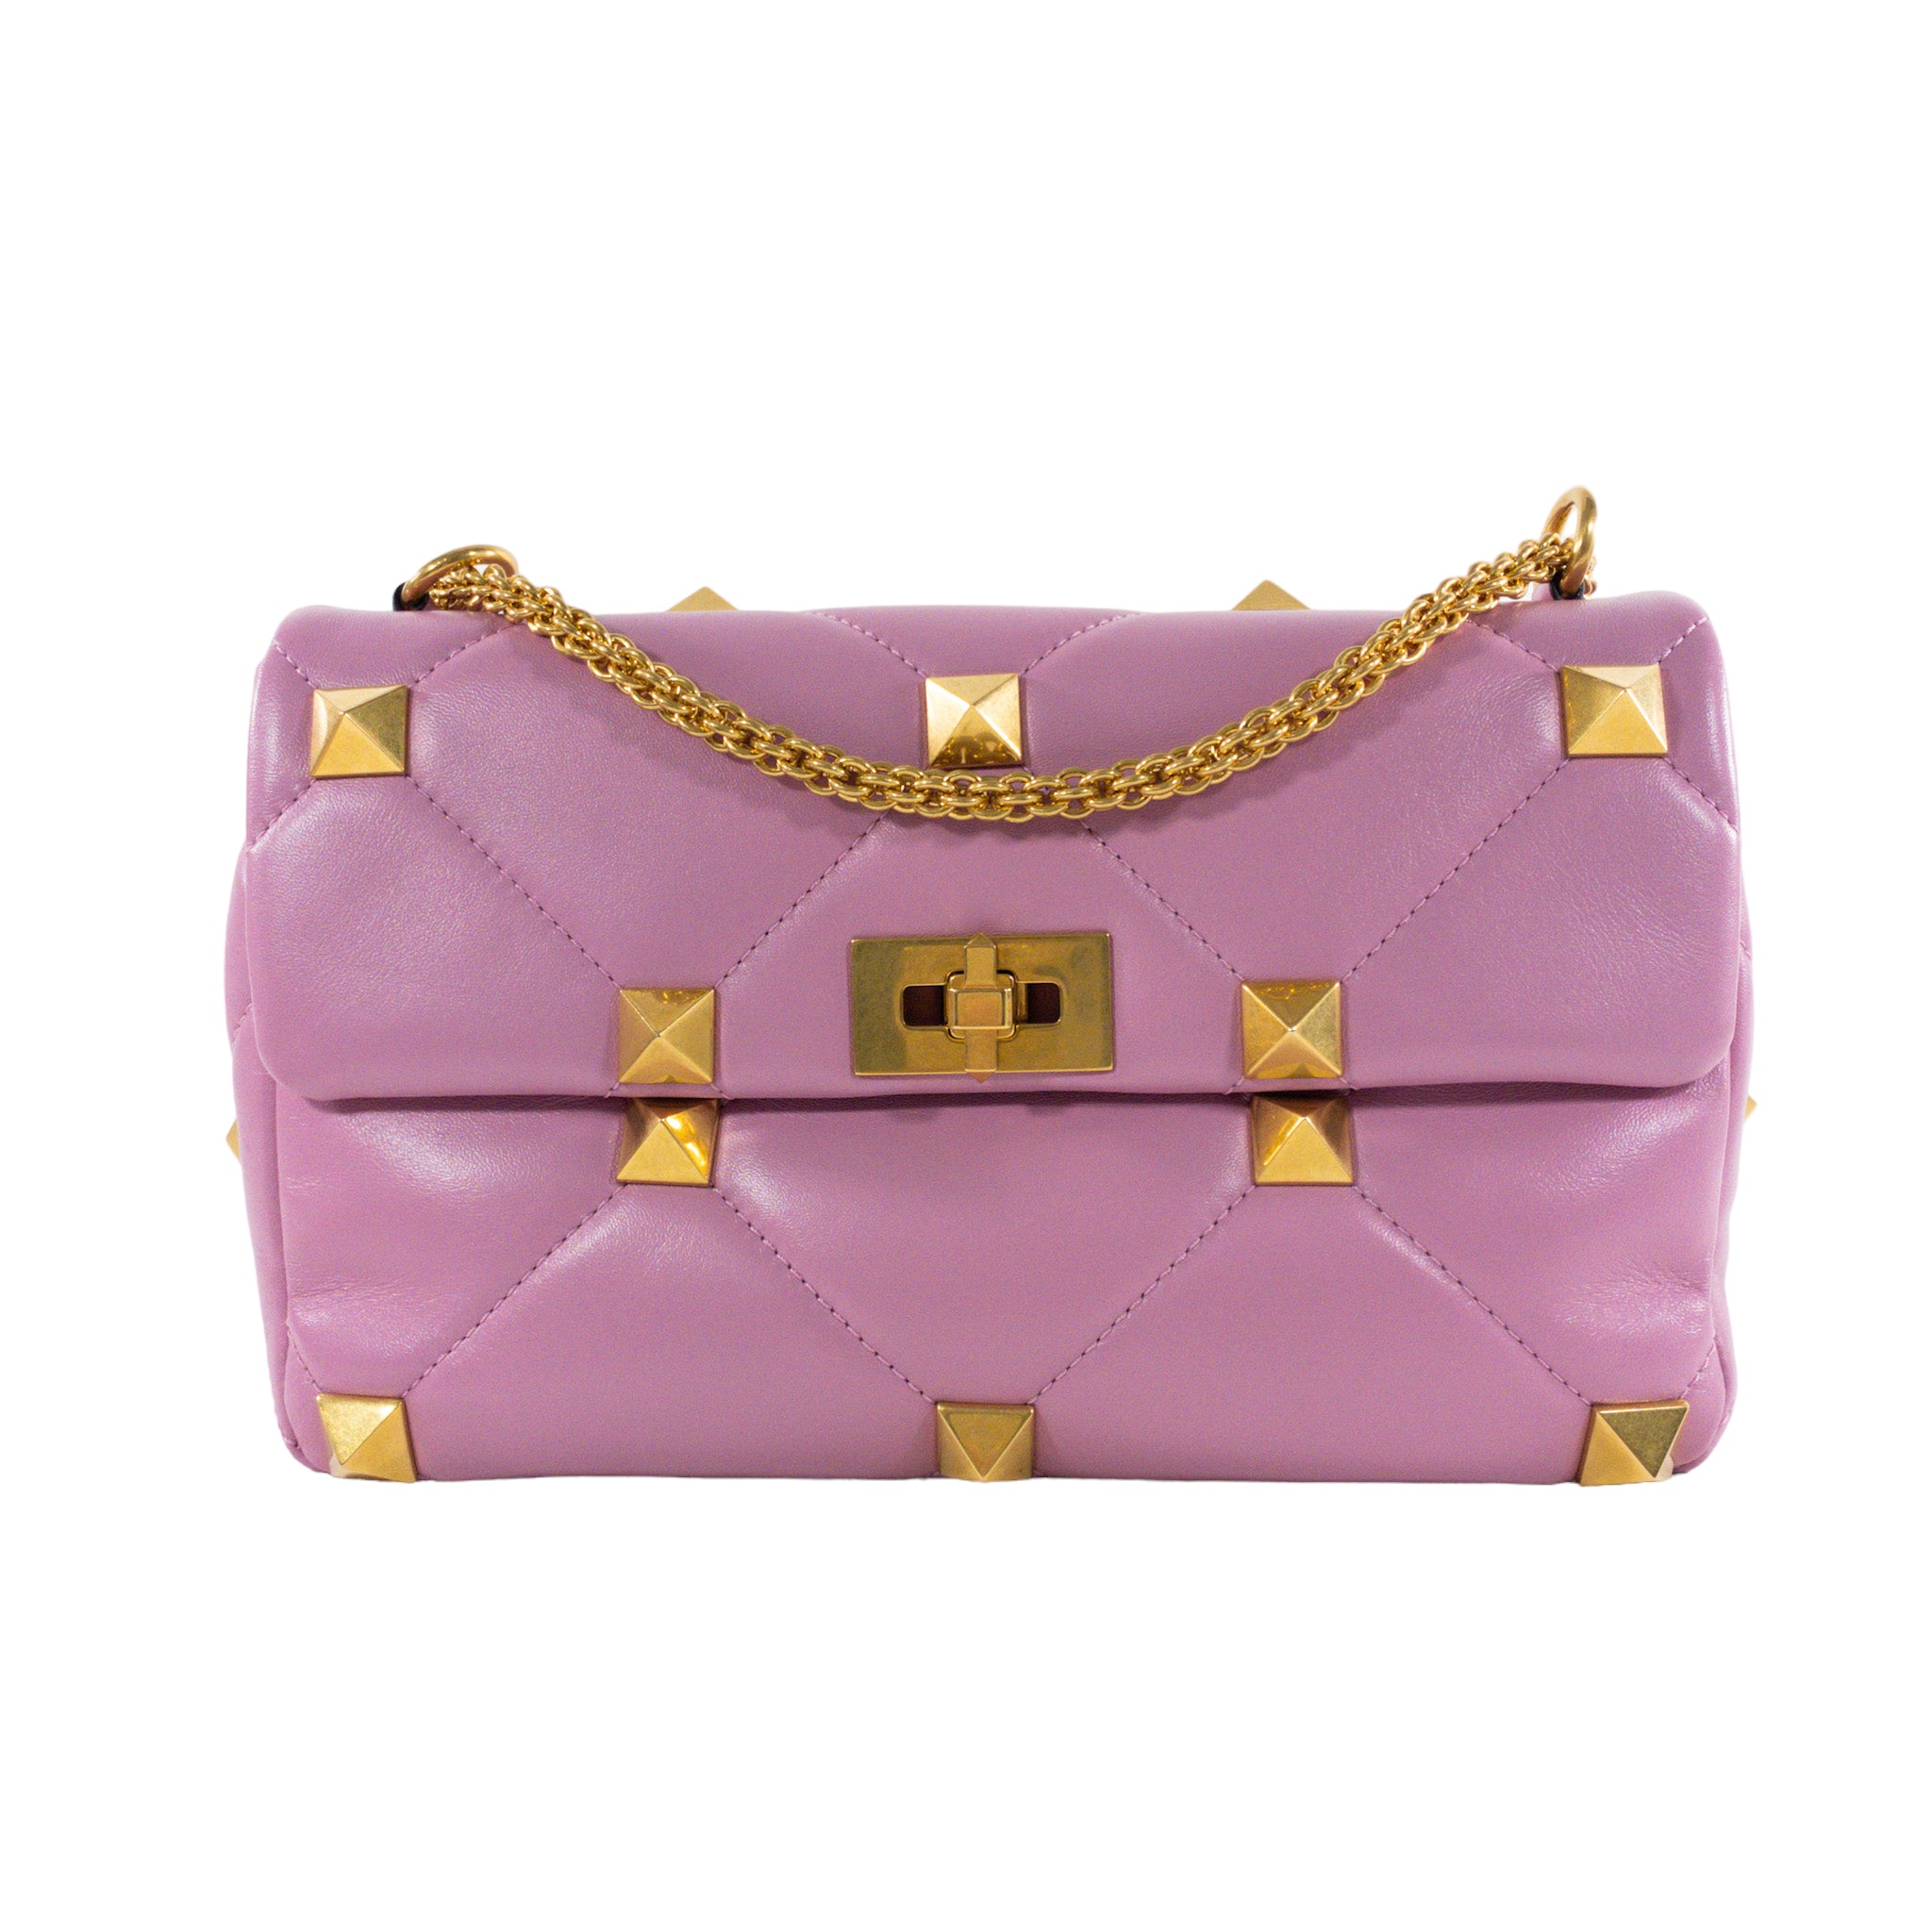 Valentino Pink Leather Small Roman Stud Top Handle Bag Valentino